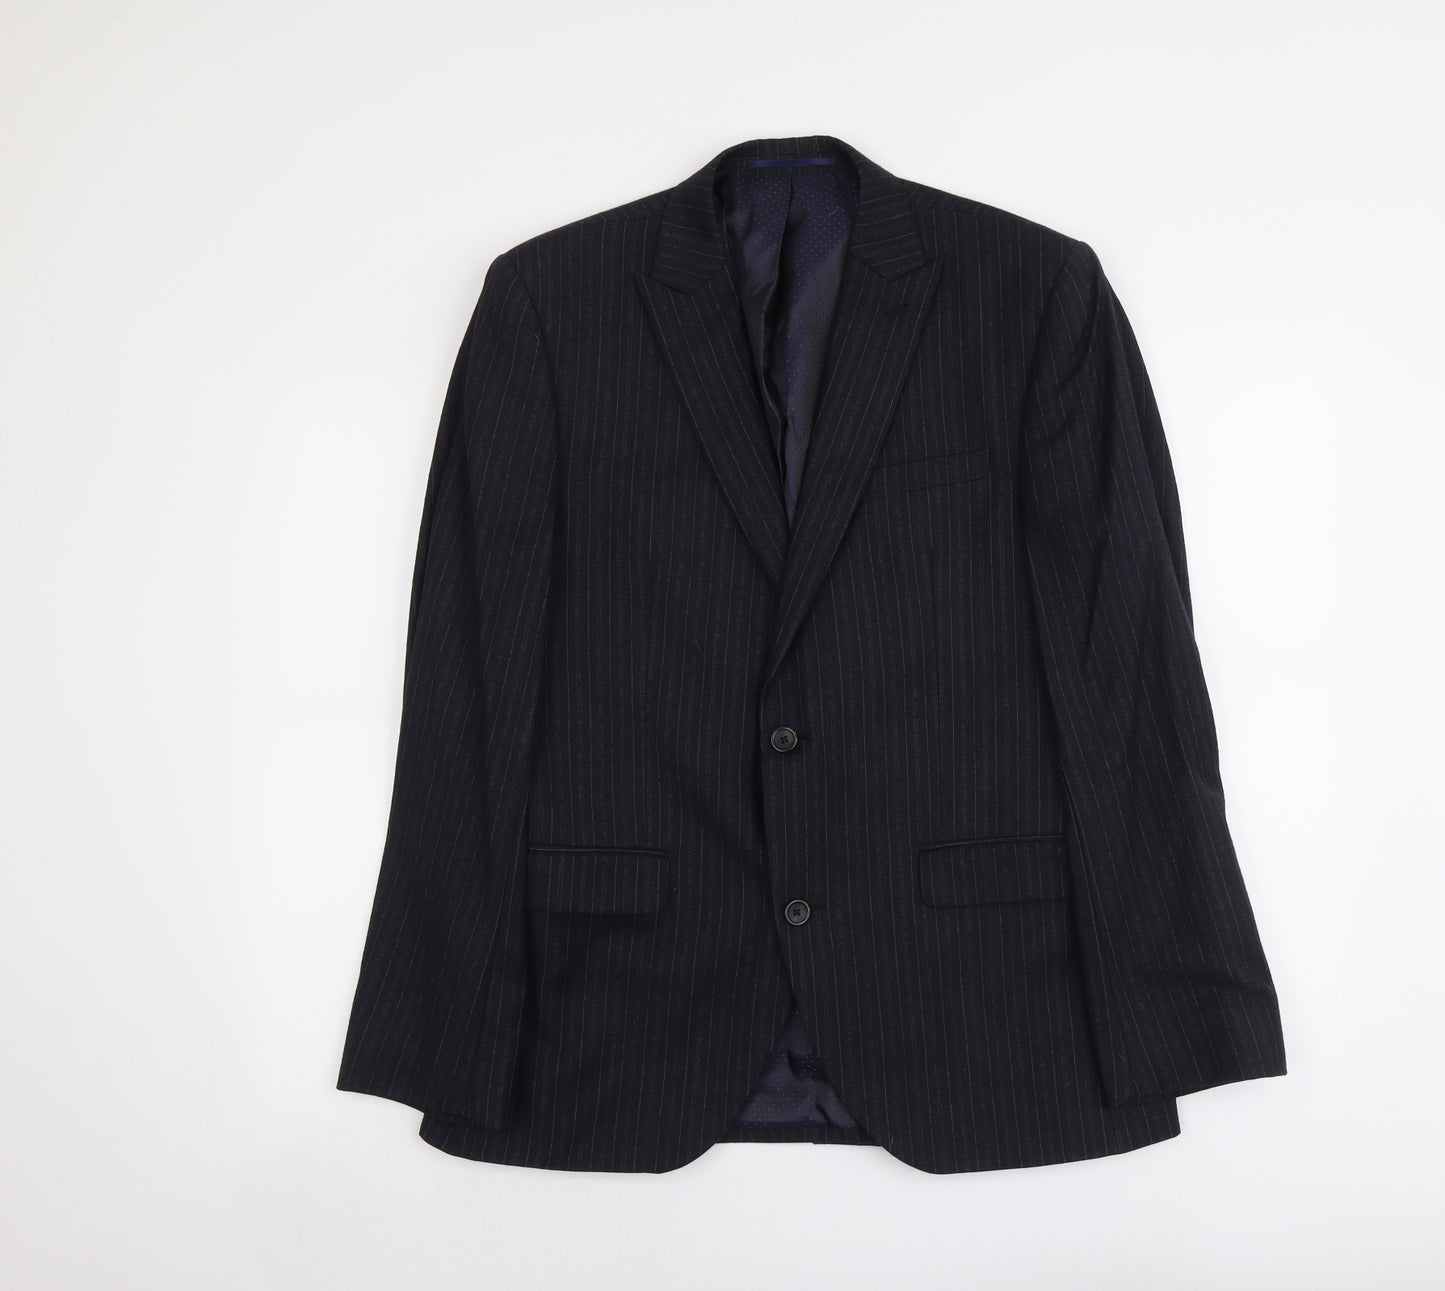 NEXT Mens Blue Striped Polyester Jacket Suit Jacket Size M Regular